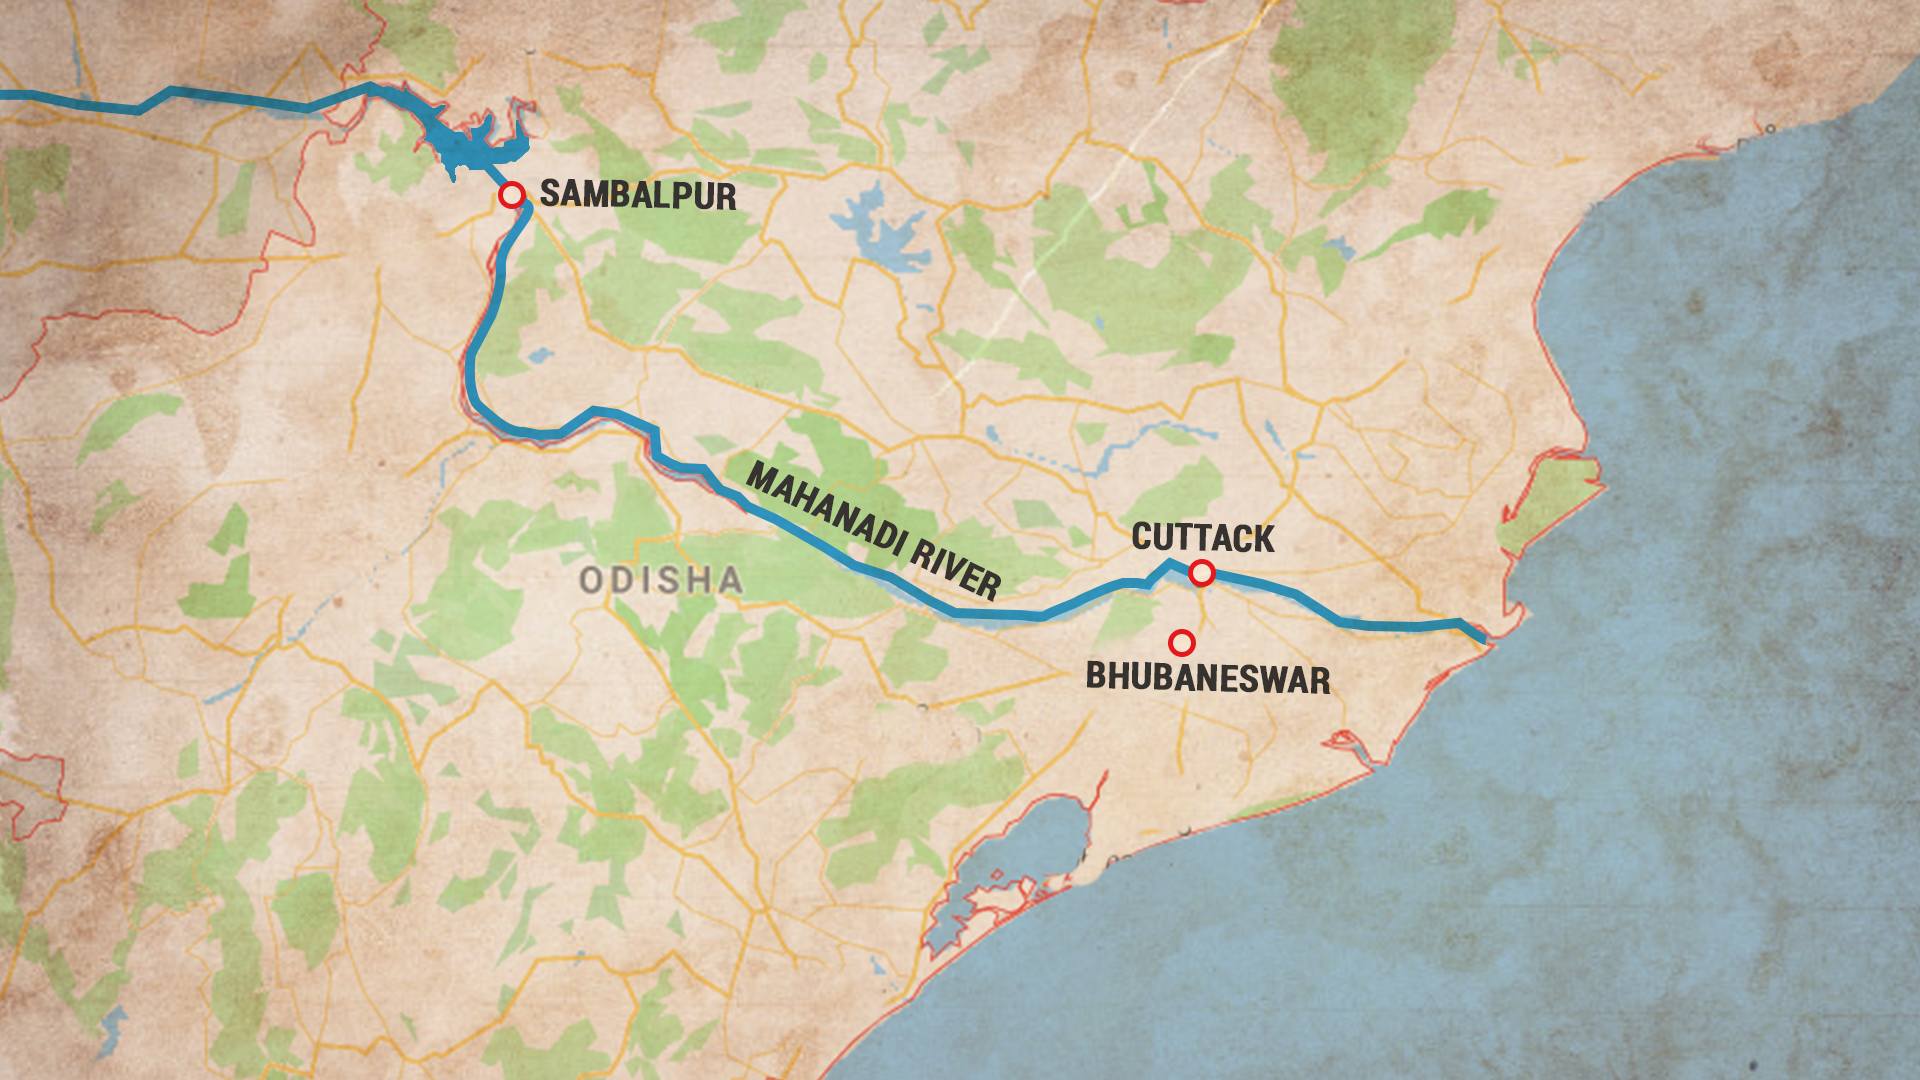 Location of Sambalpur